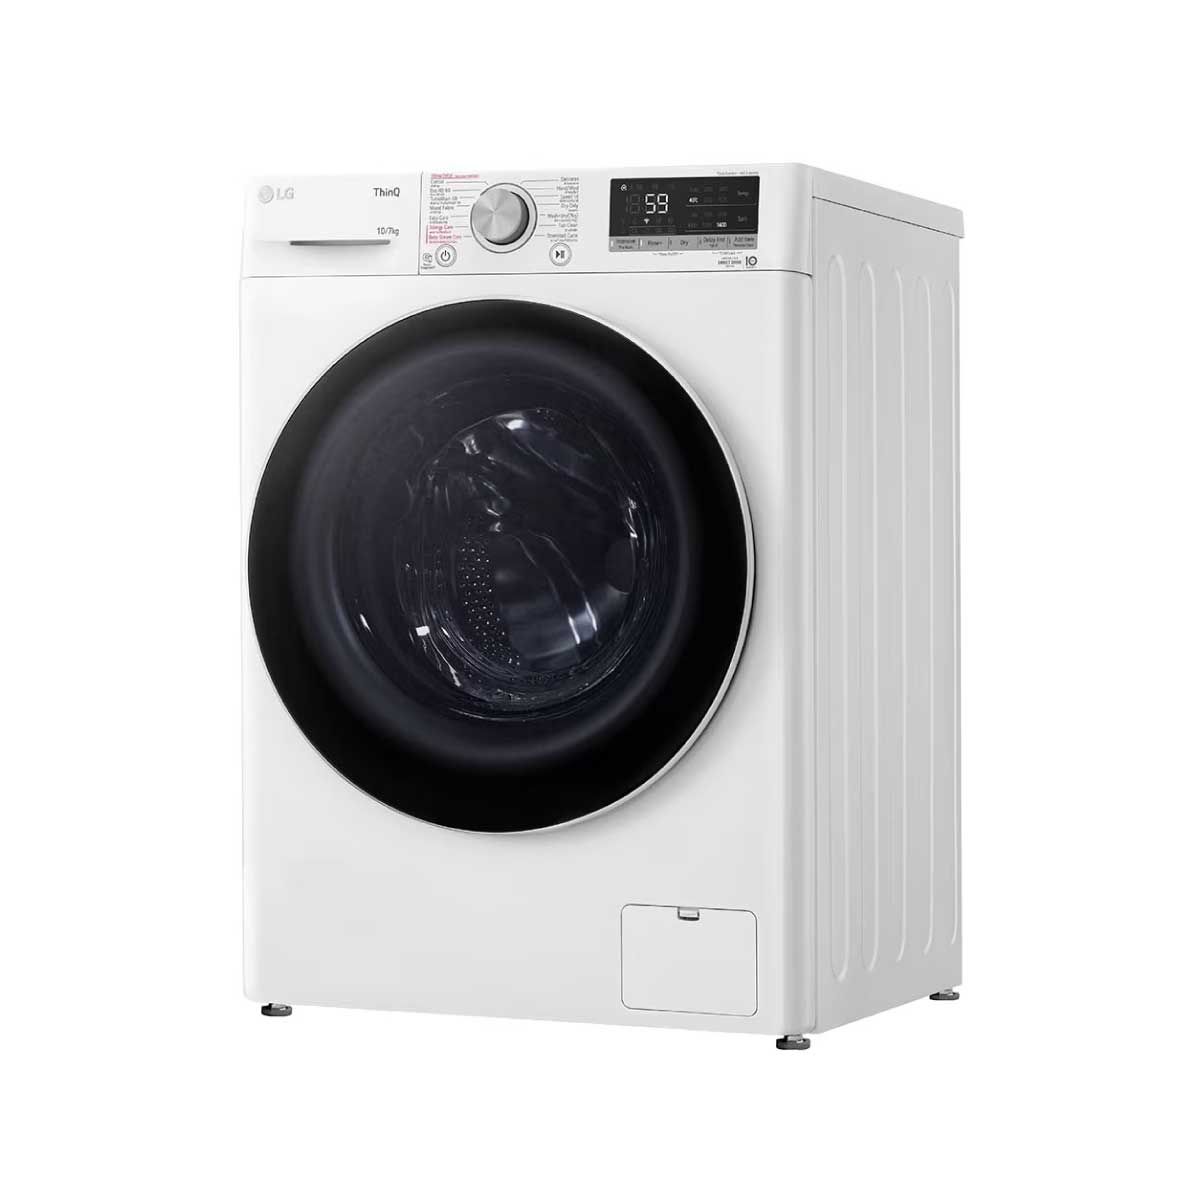 LG เครื่องซักผ้าฝาหน้า ระบบ AI DD ซัก10./อบ7กก. , WI-FI control   สีขาว รุ่น FV1410H4W